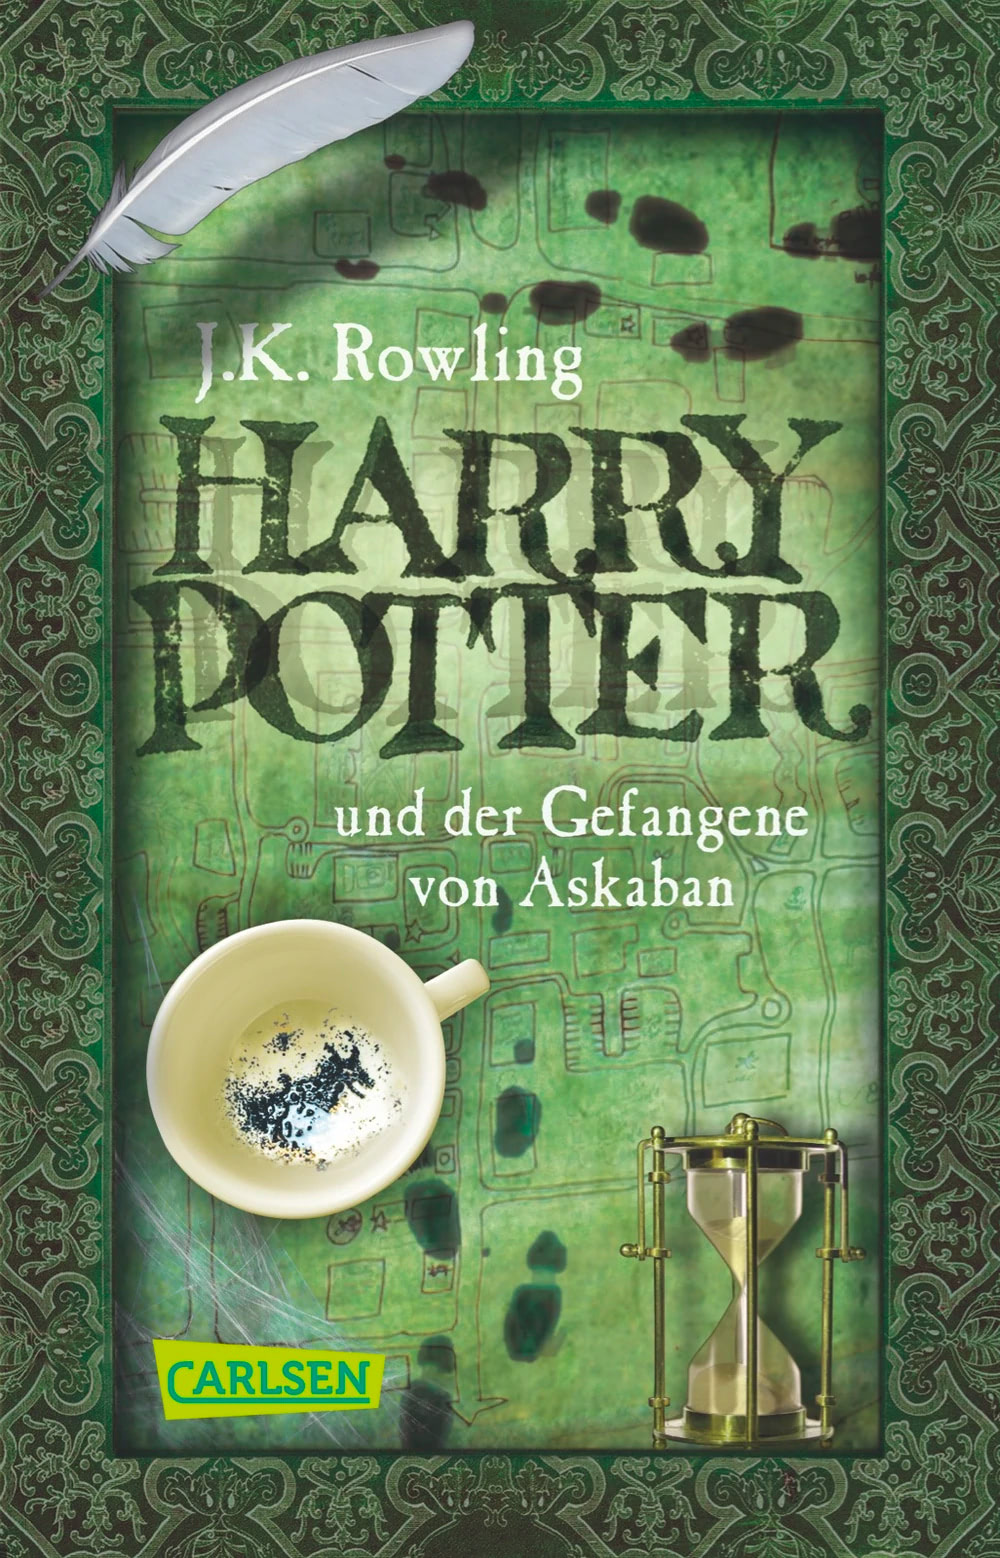 ‘Prisoner of Azkaban’ German anniversary pocket edition